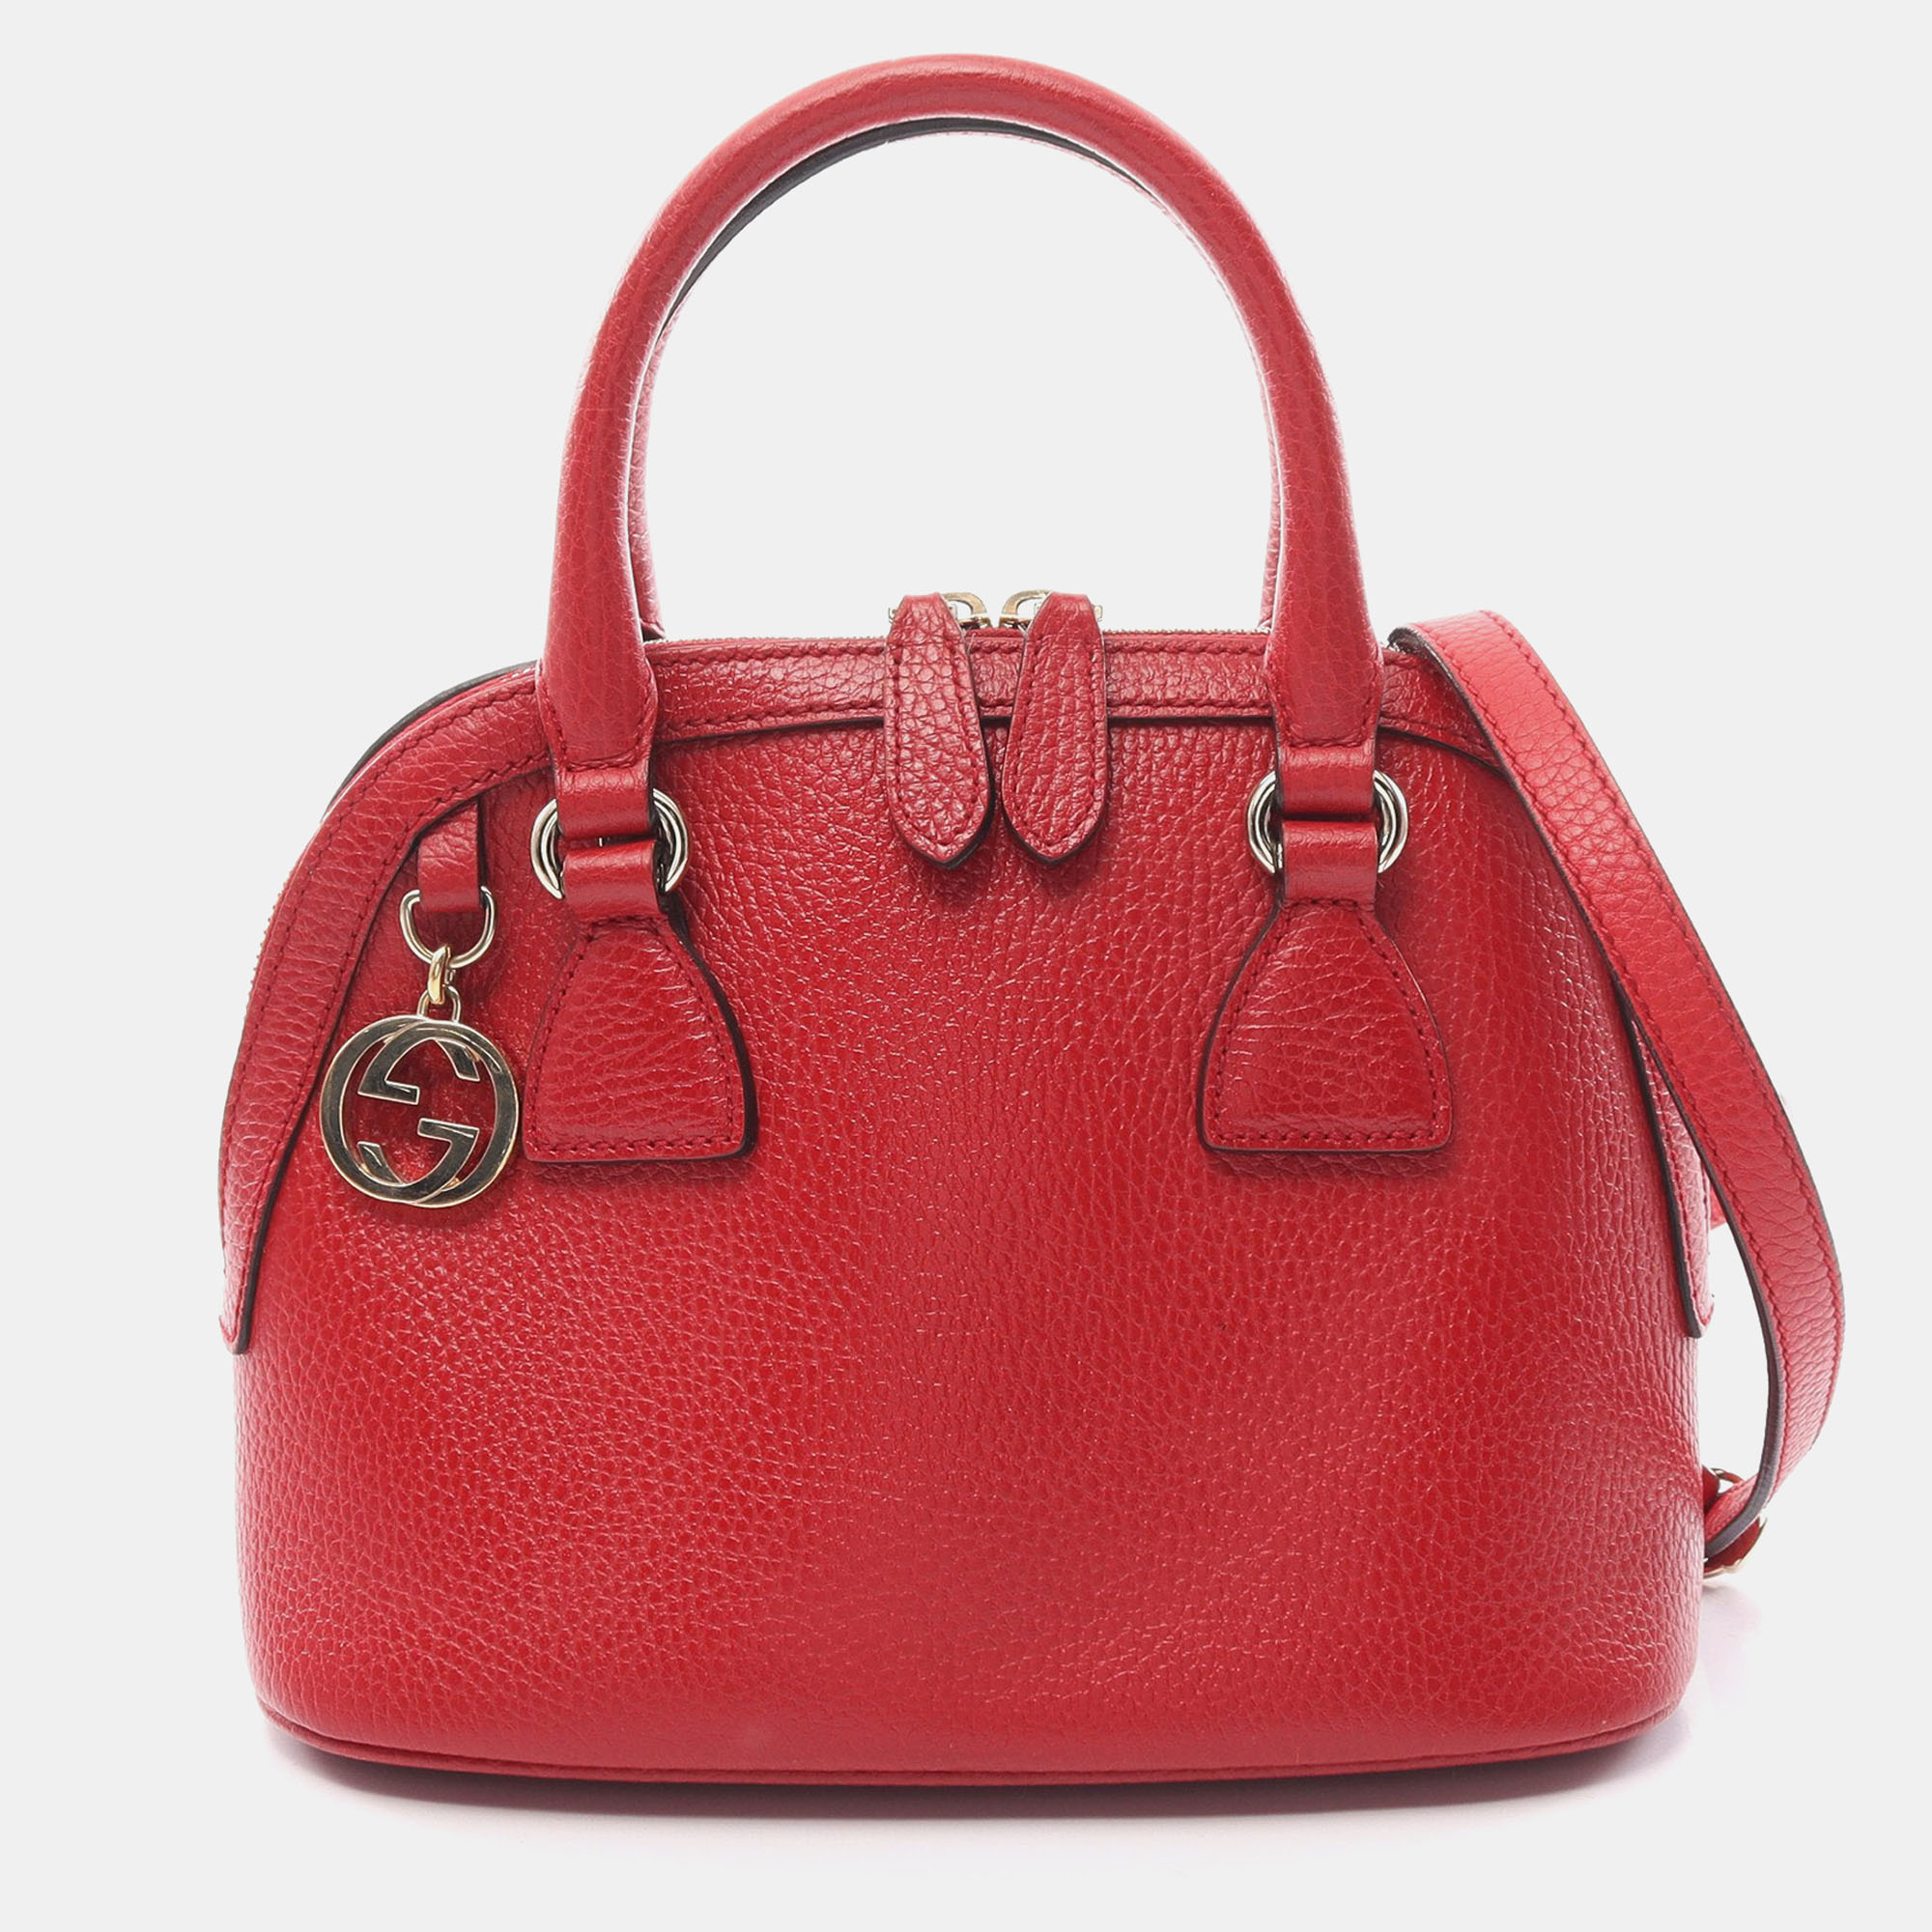 Gucci interlocking g handbag leather red 2way